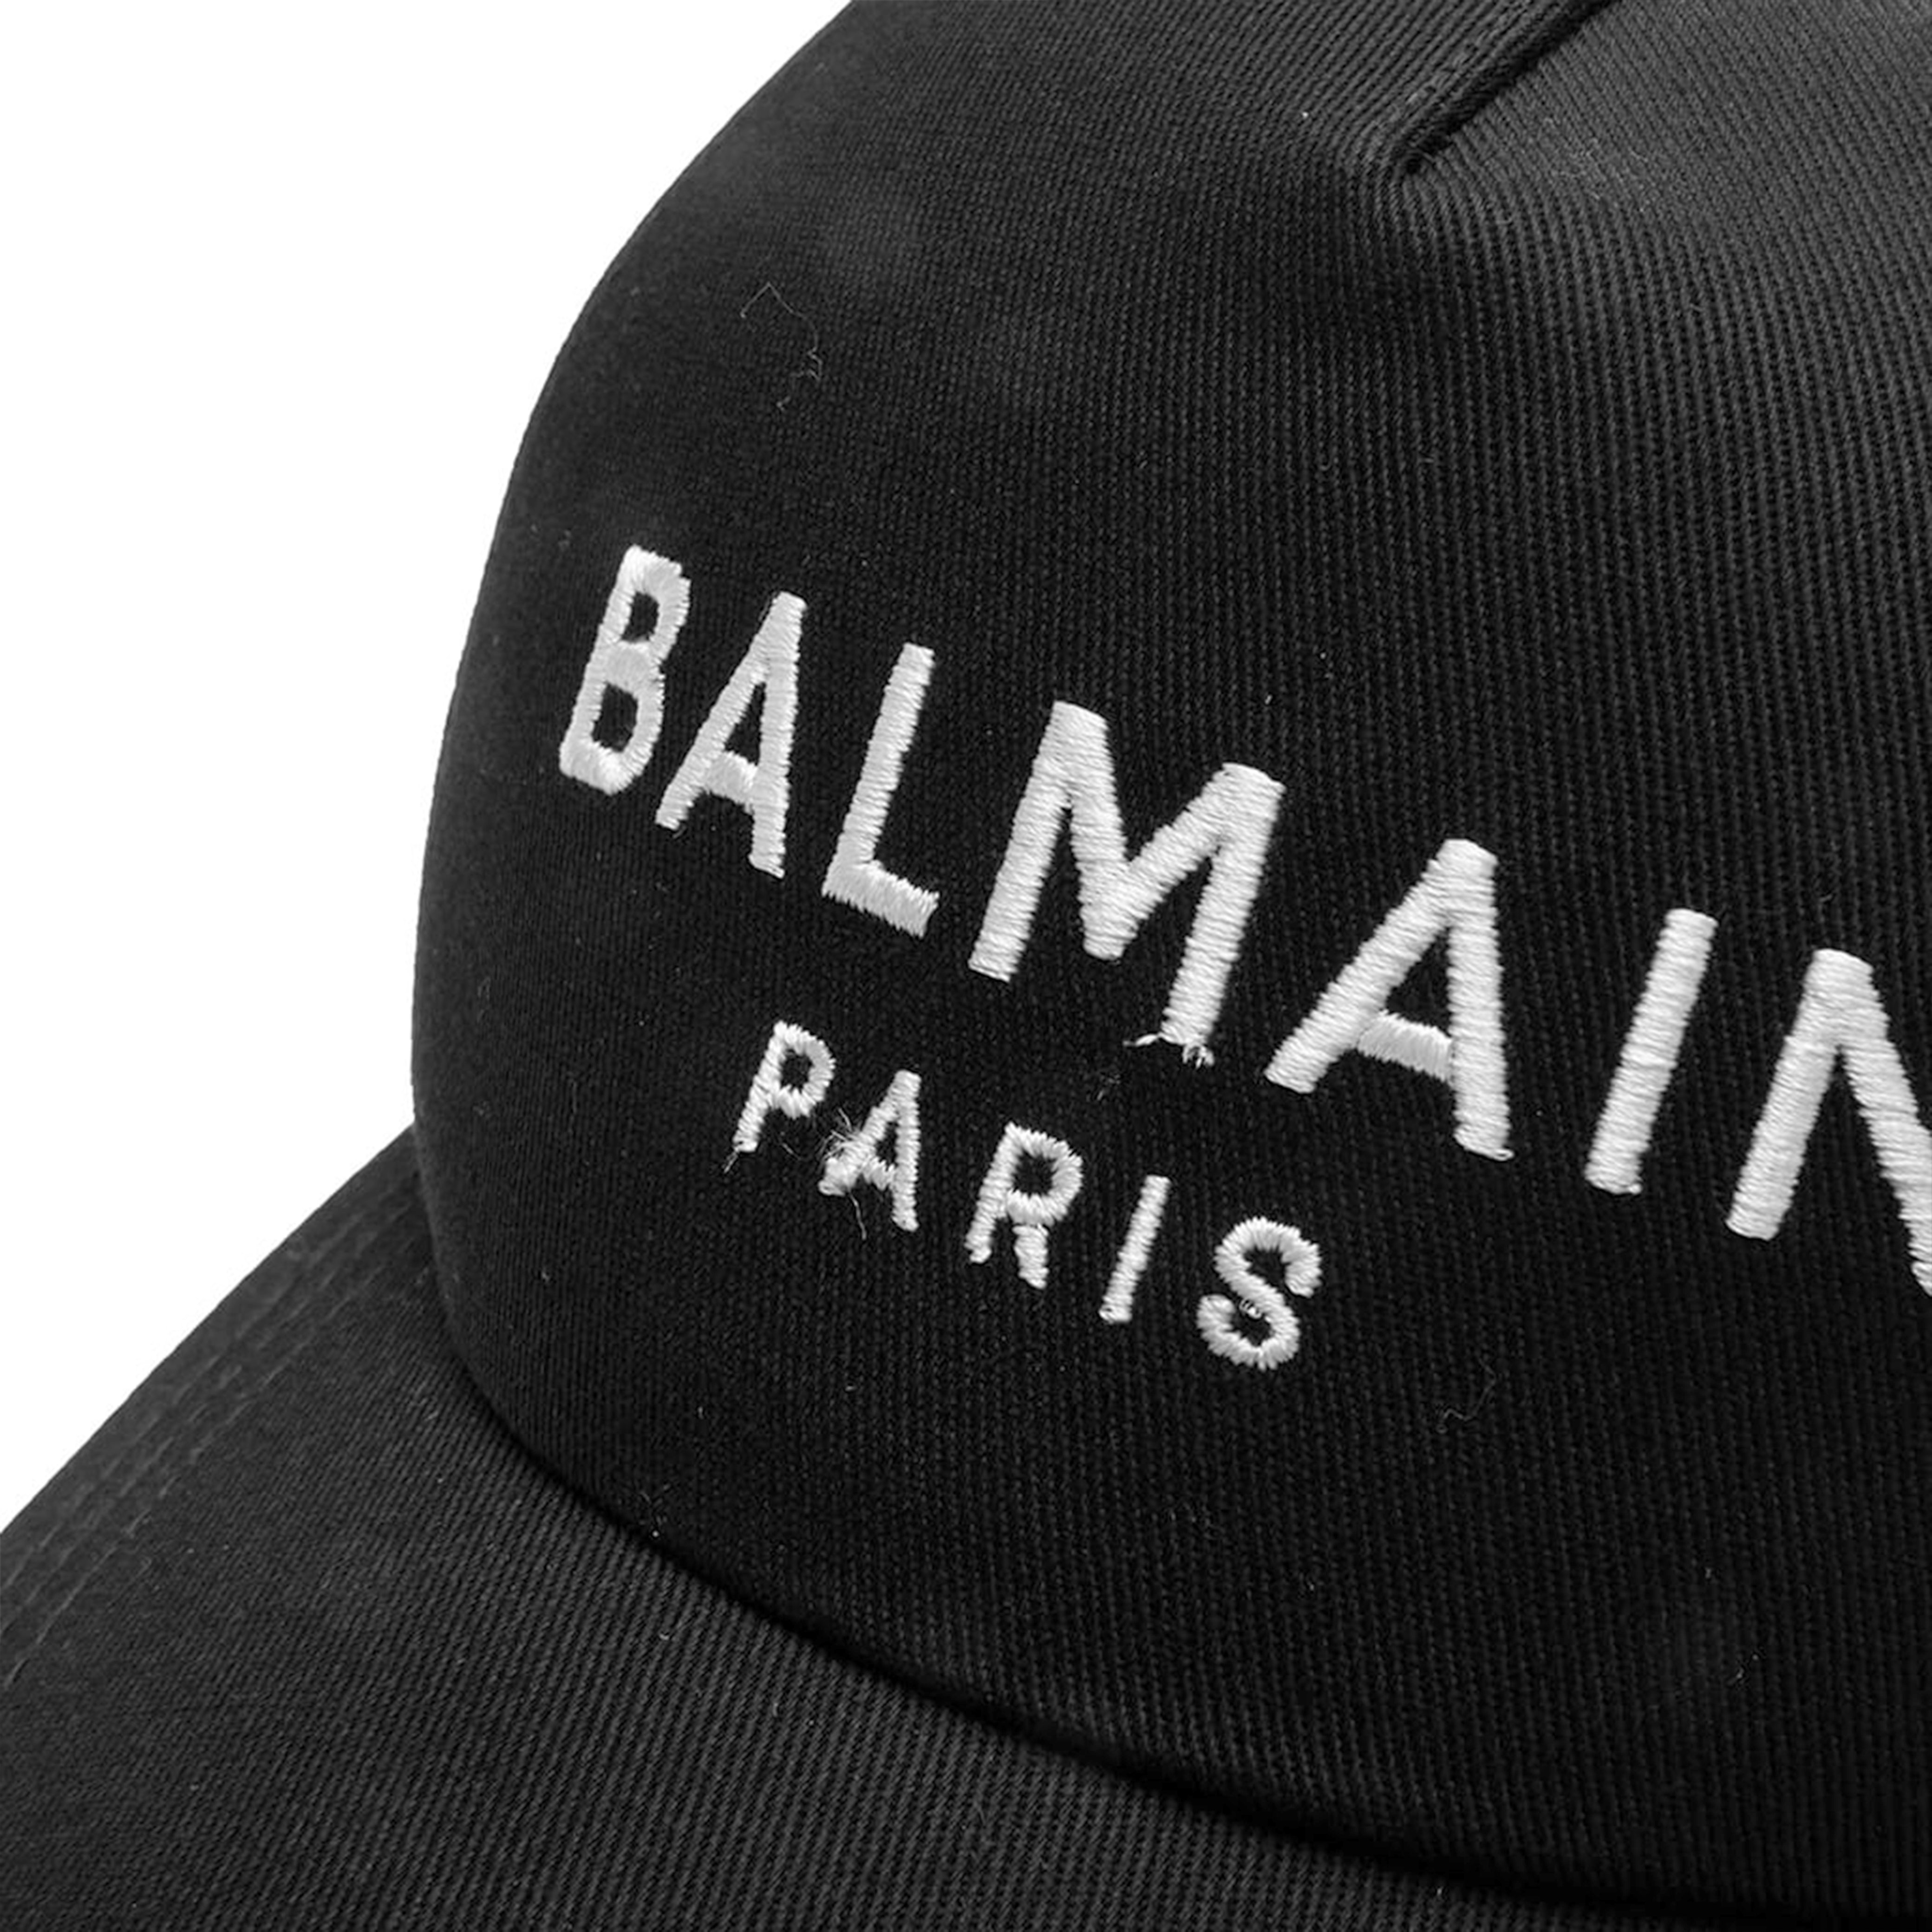 Balmain Logo Padded Bucket Hat Blanc Noir